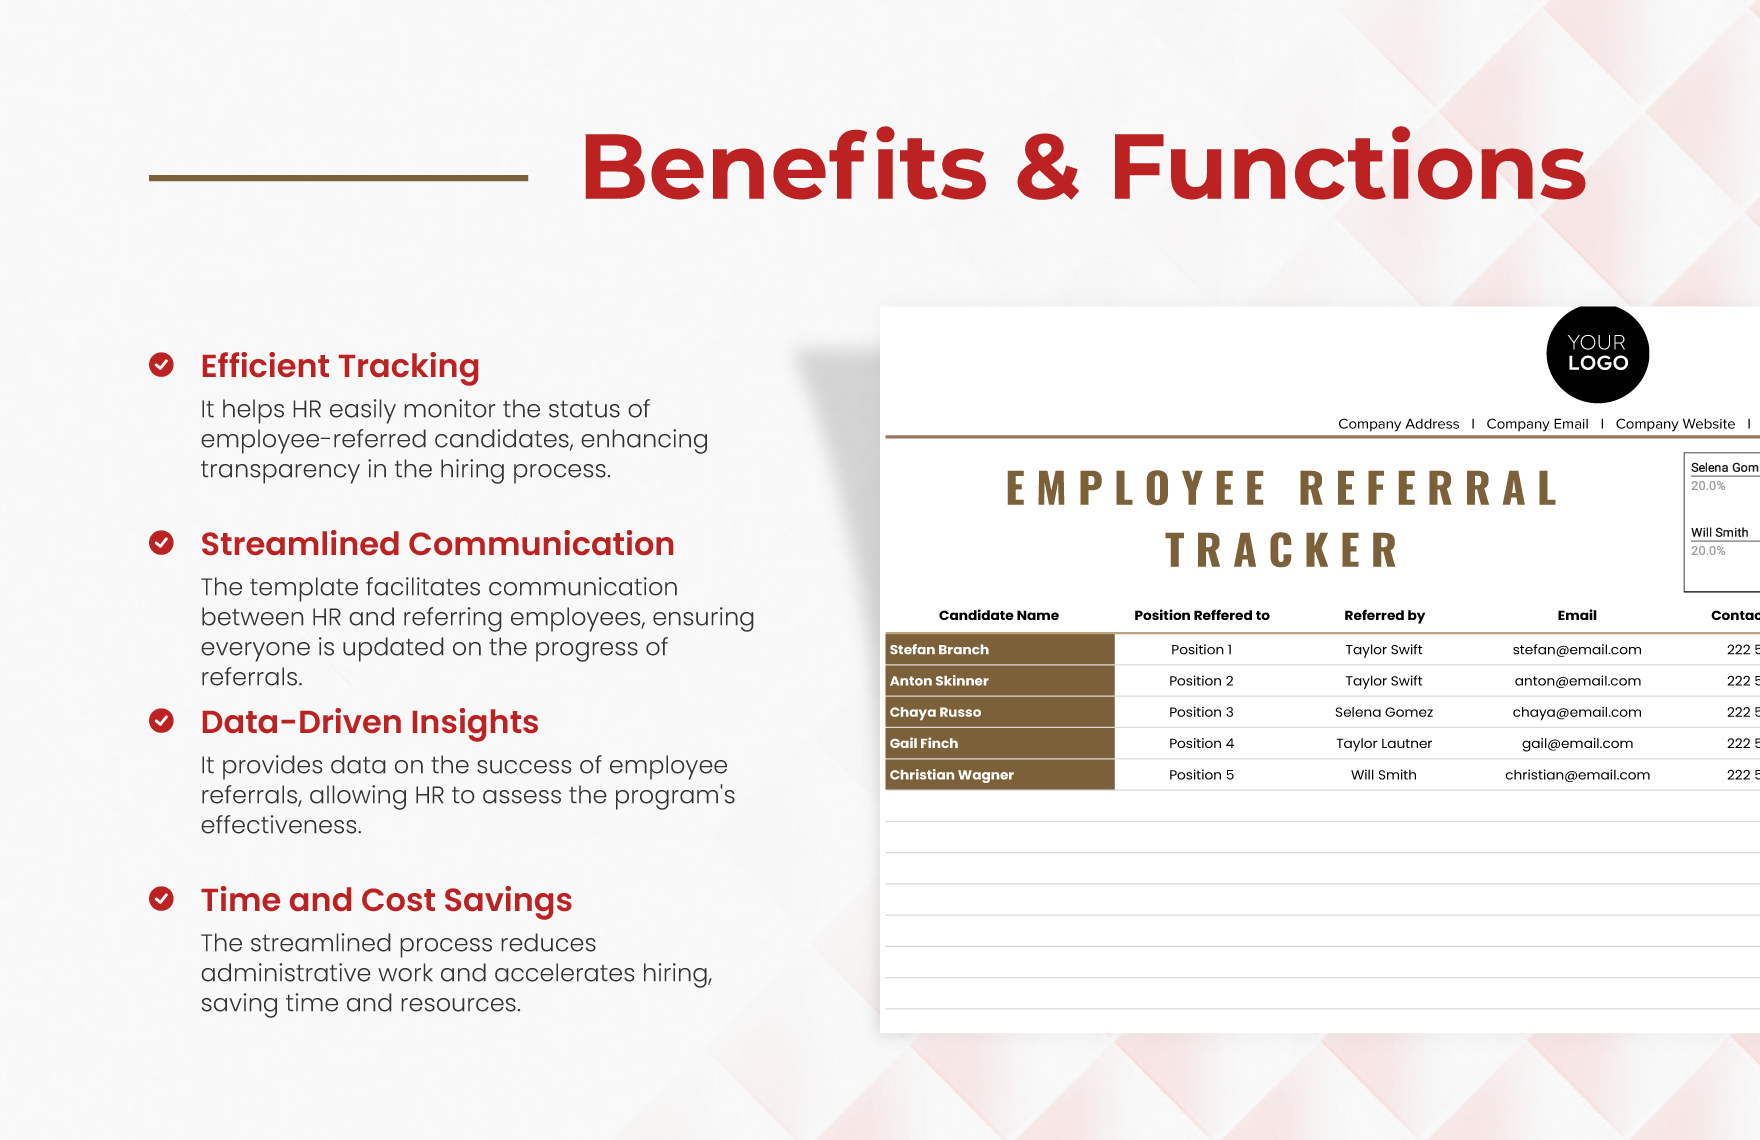 Employee Referral Tracker HR Template